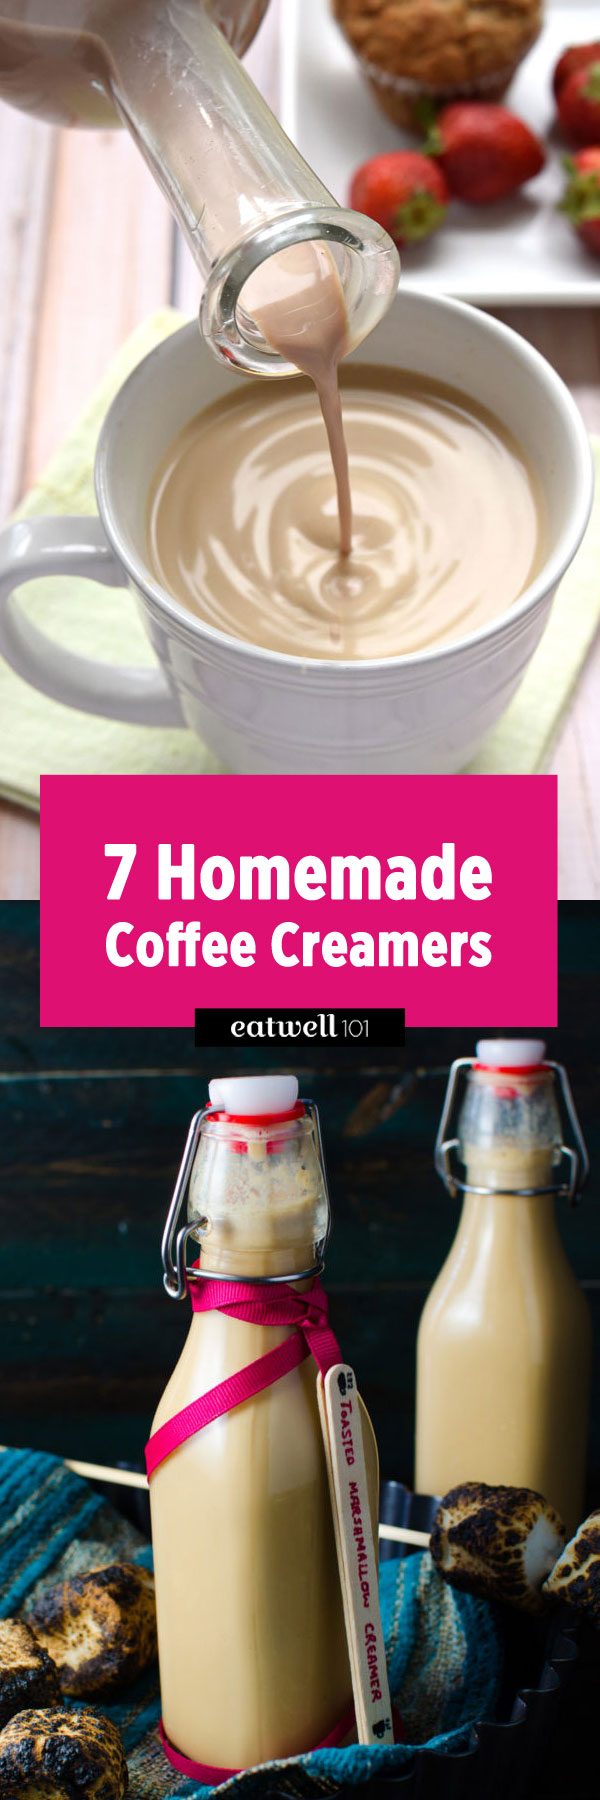 Homemade Coffee Creamers - #coffee #creamer #recipes #eatwell101 -  7 Coffee Creamer Recipes to Fancy Up Your Morning. Amp up your morning coffee with these delicious coffee creamer recipes.